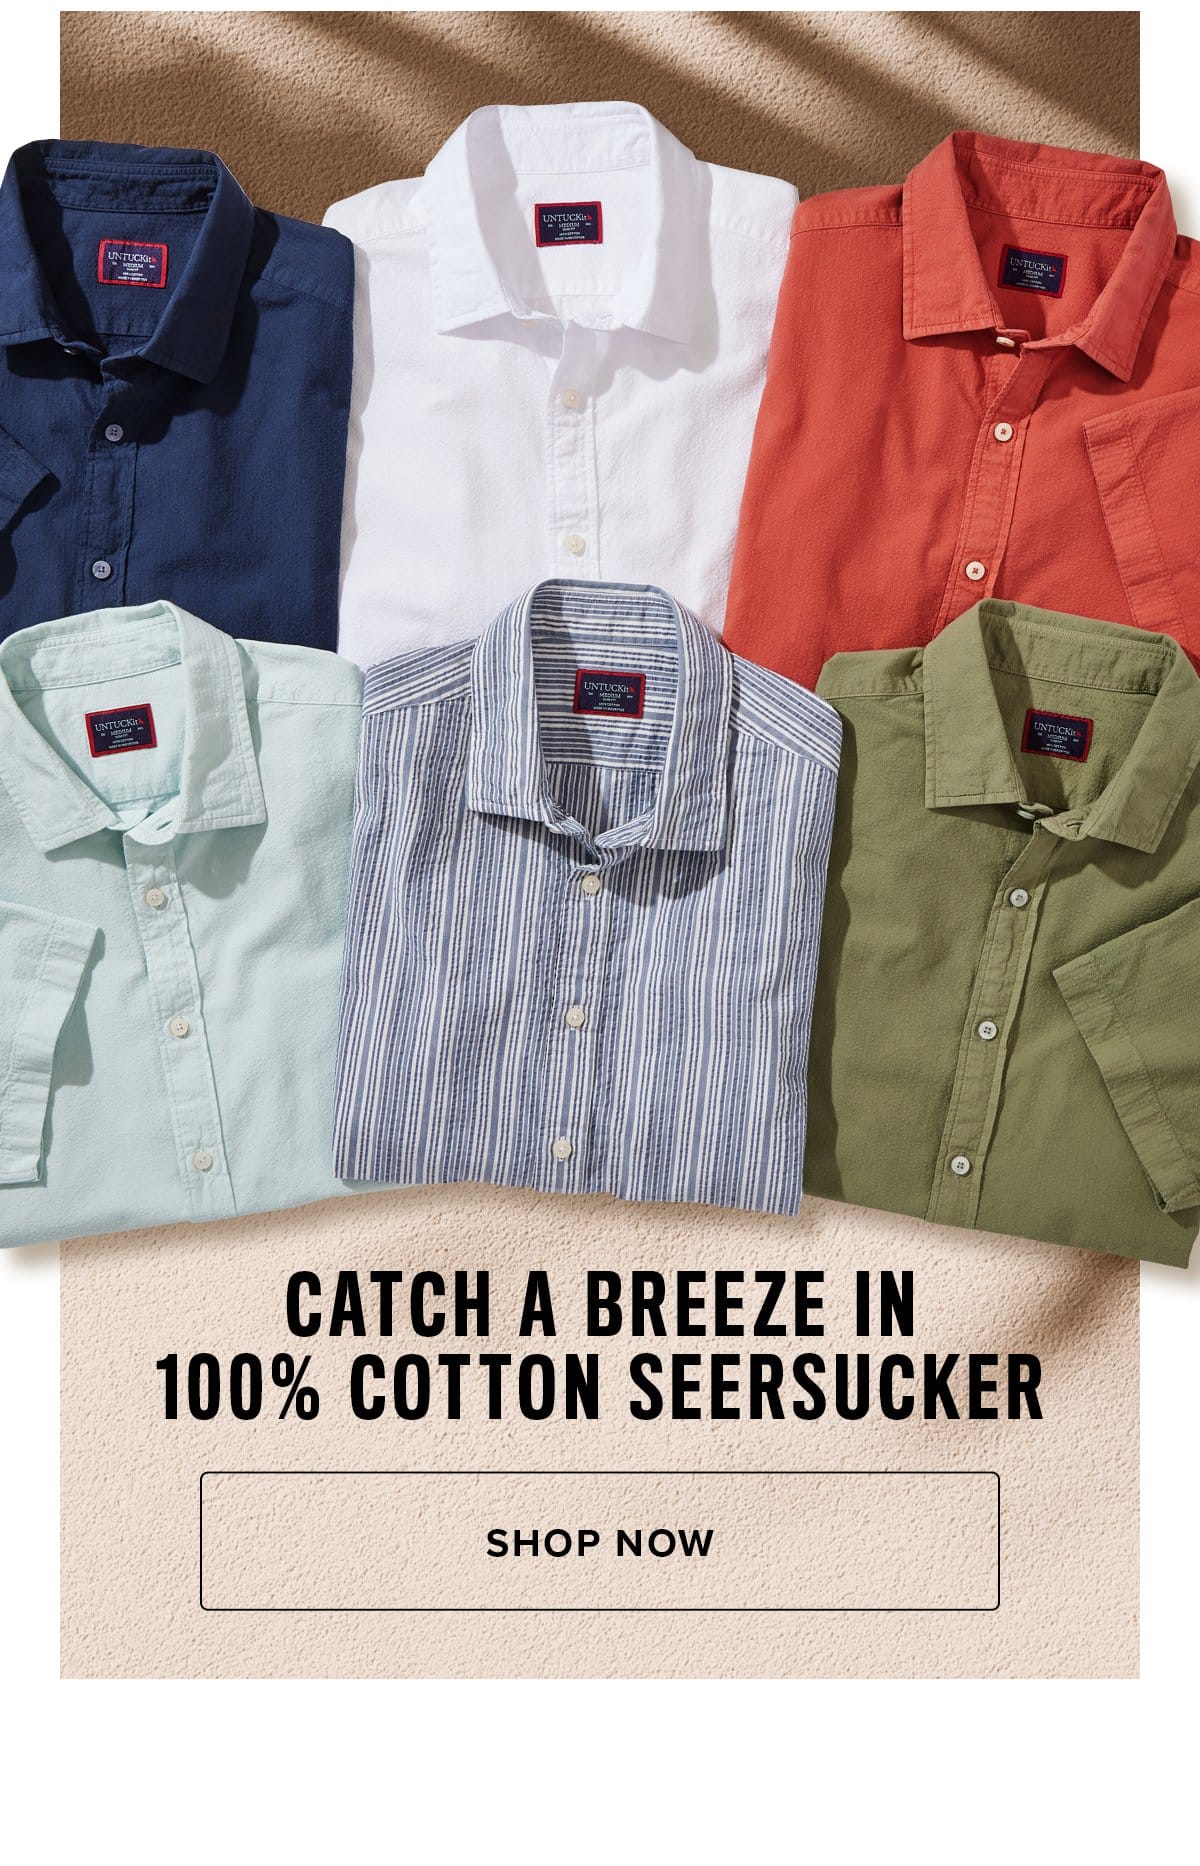 Catch A Breeze In 100% Cotton Seersucker